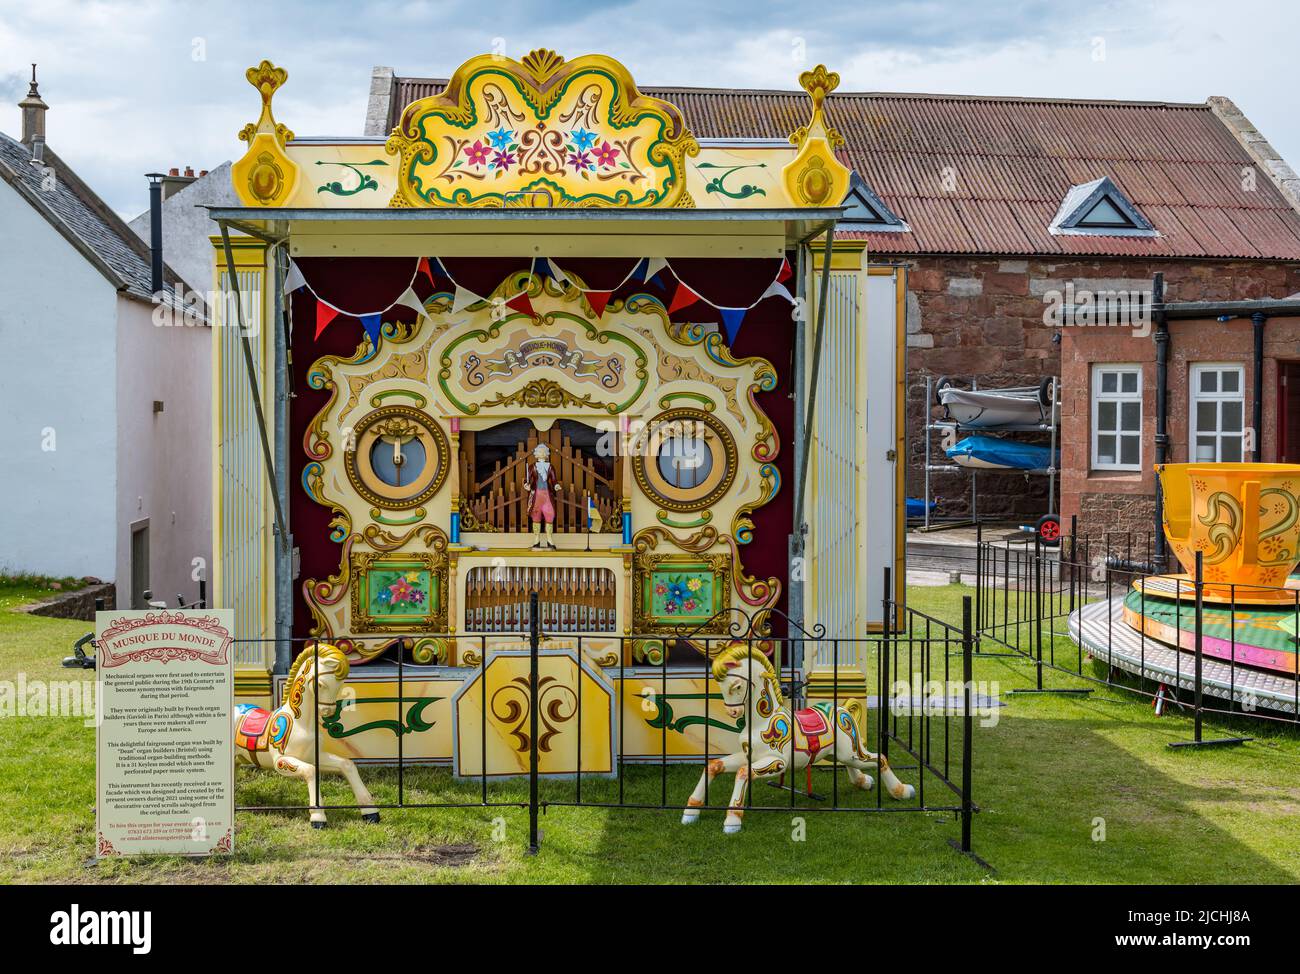 Quirky mechanical fairground organ in seaside resort, North Berwick, East Lothian, Scotland, UK Stock Photo